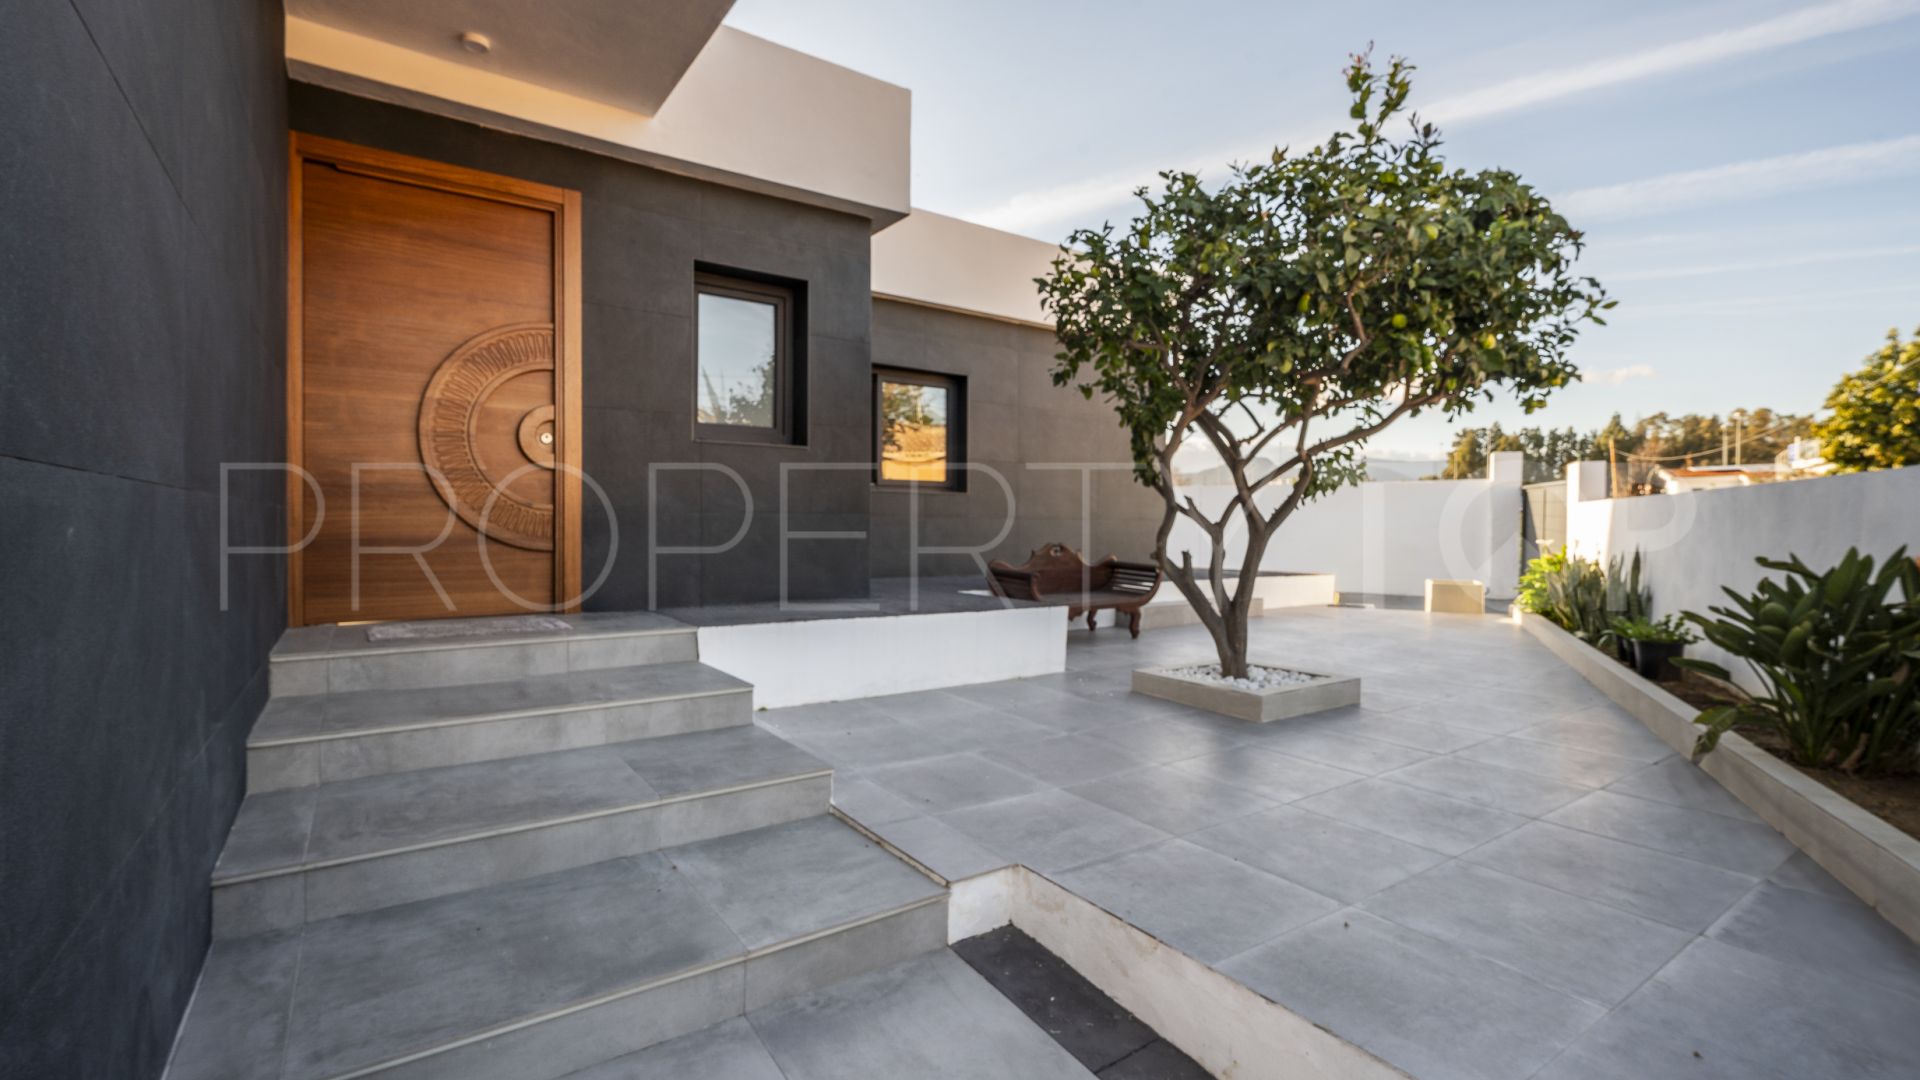 For sale villa in Linda Vista Baja with 3 bedrooms